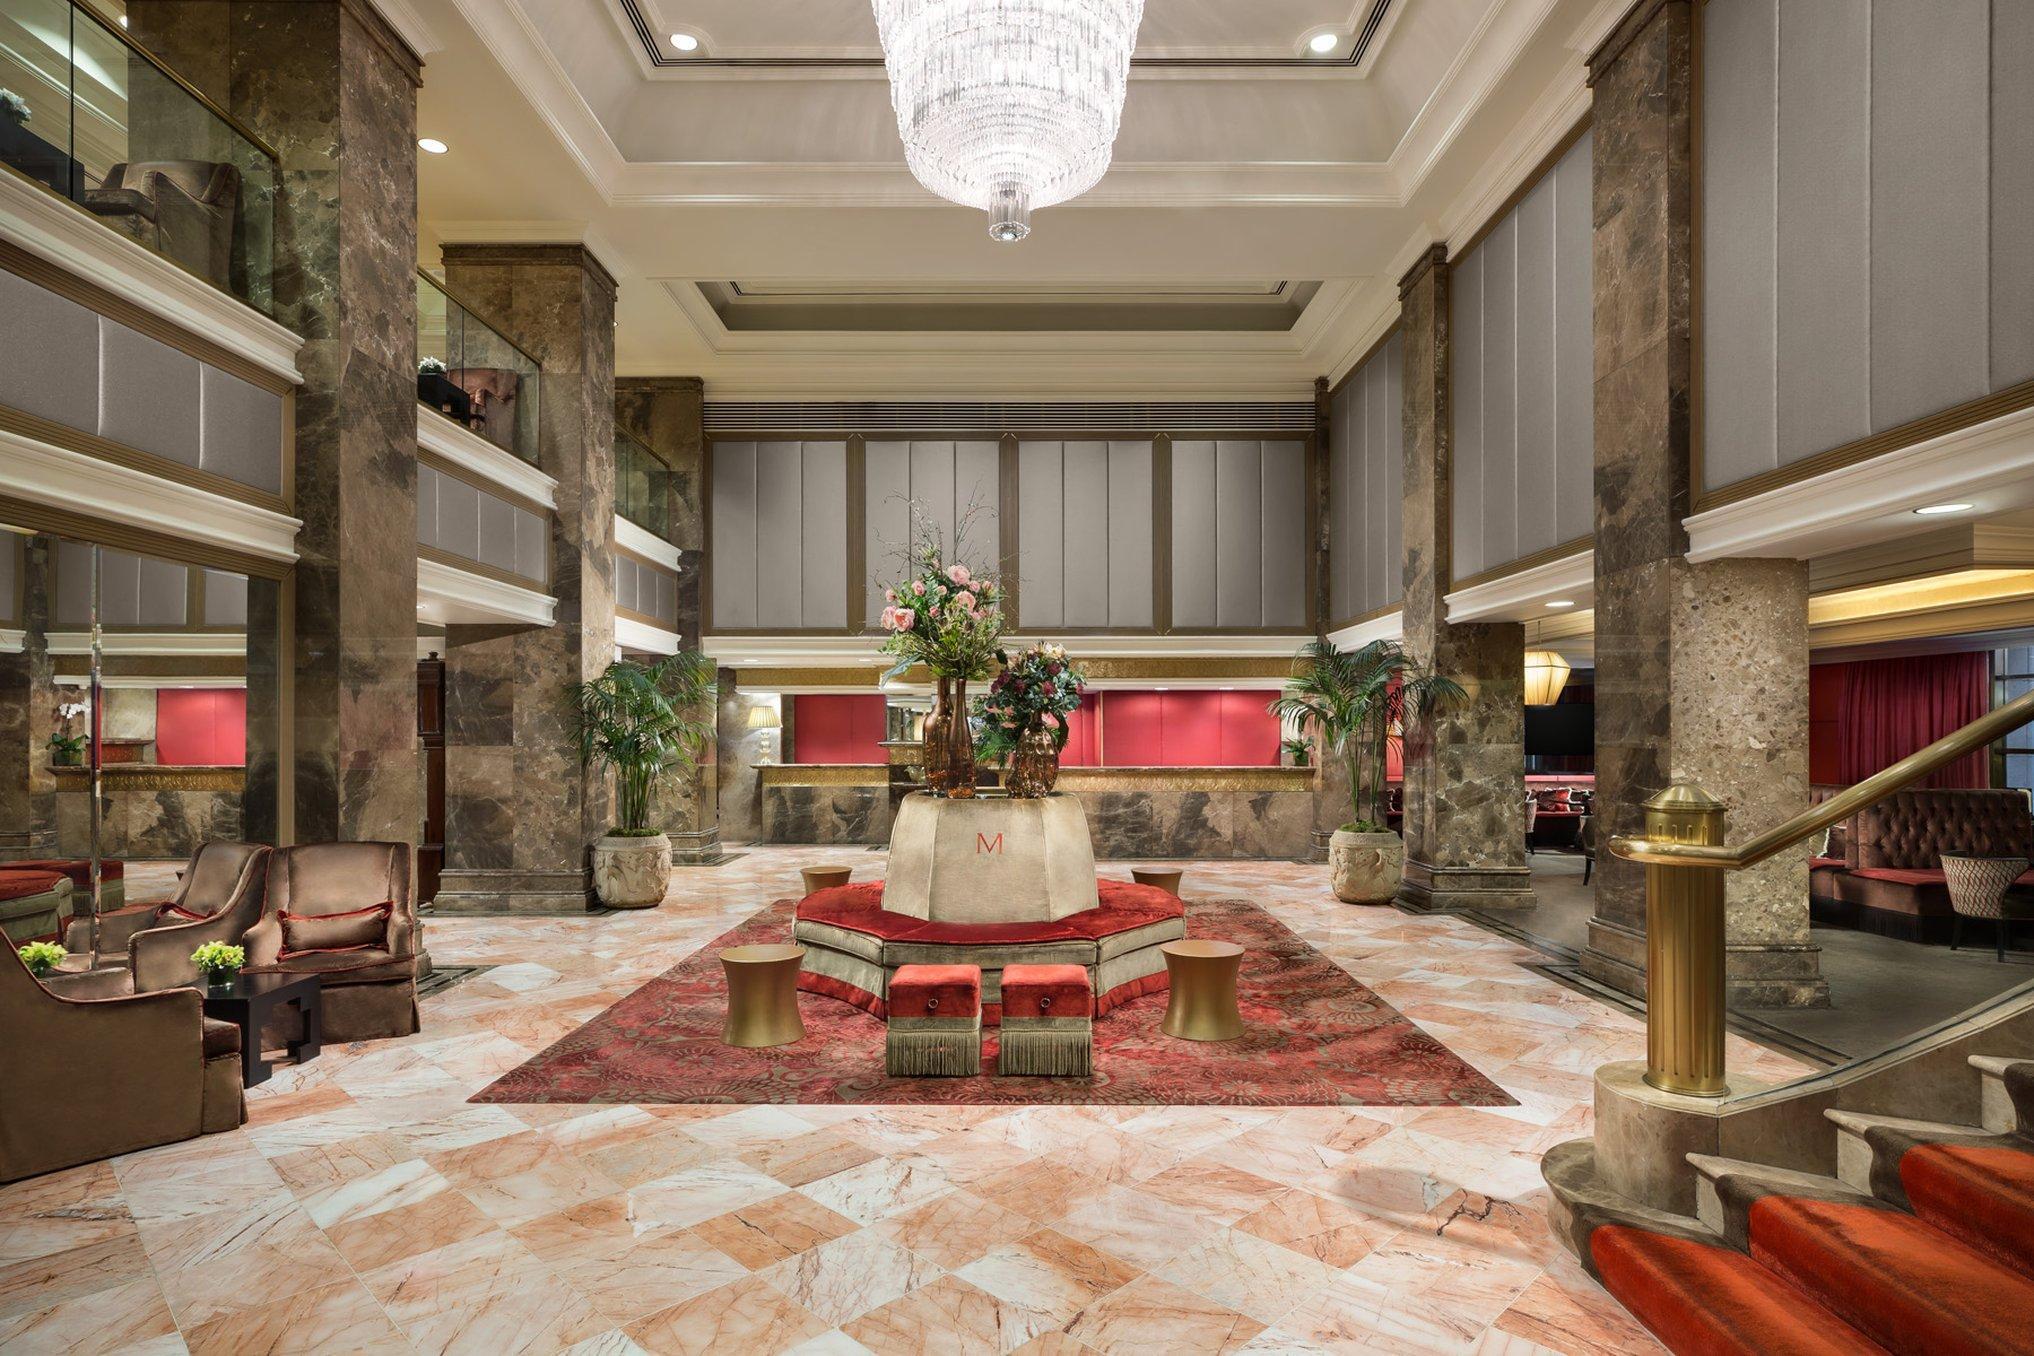 The Michelangelo Hotel, New York